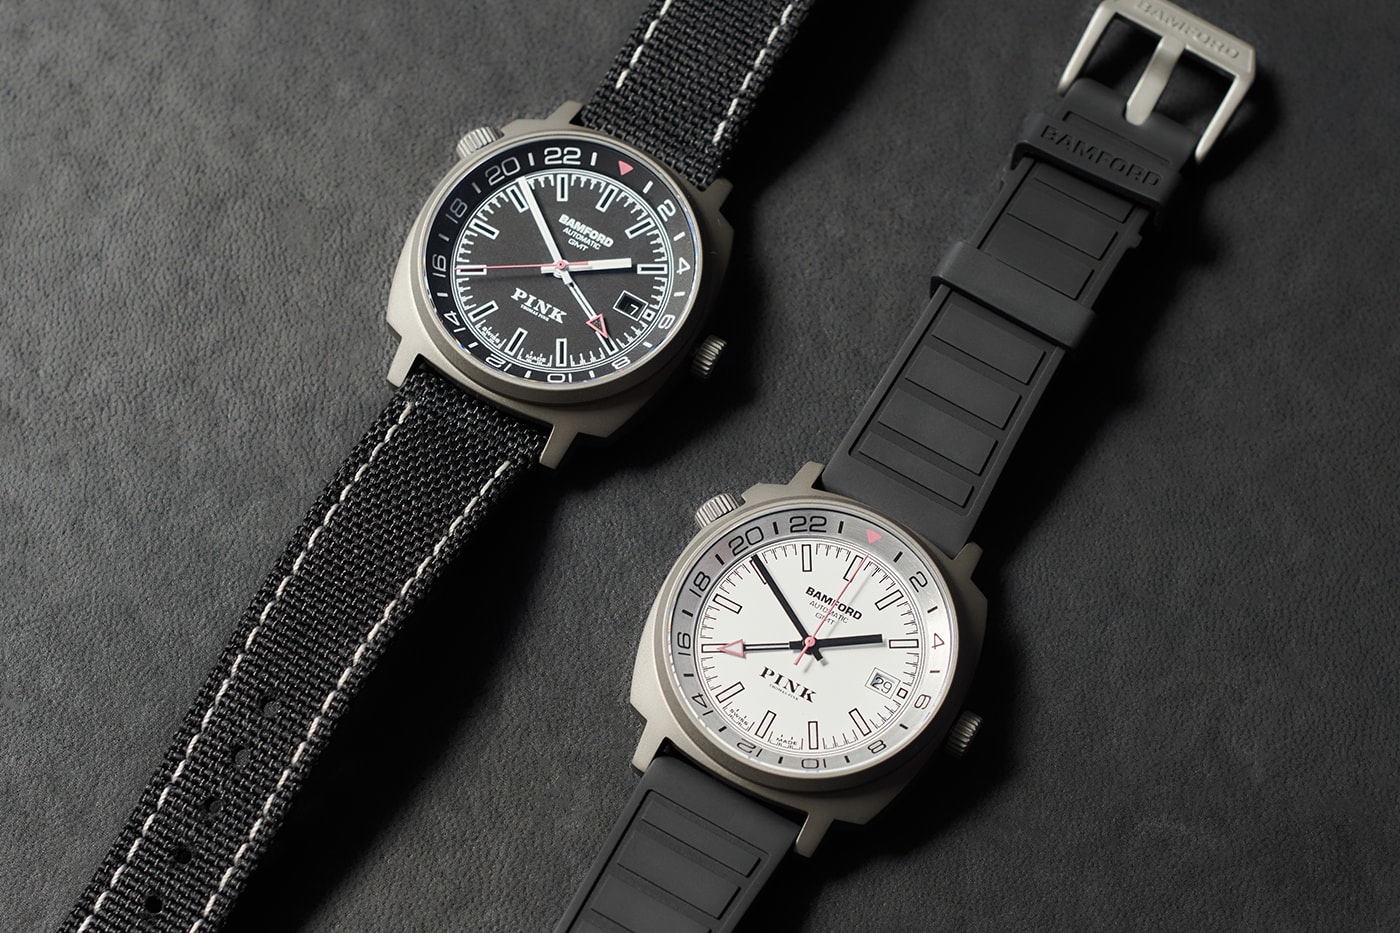 Bamford London x Thomas Pink GMT Watch Collaboration Release Info